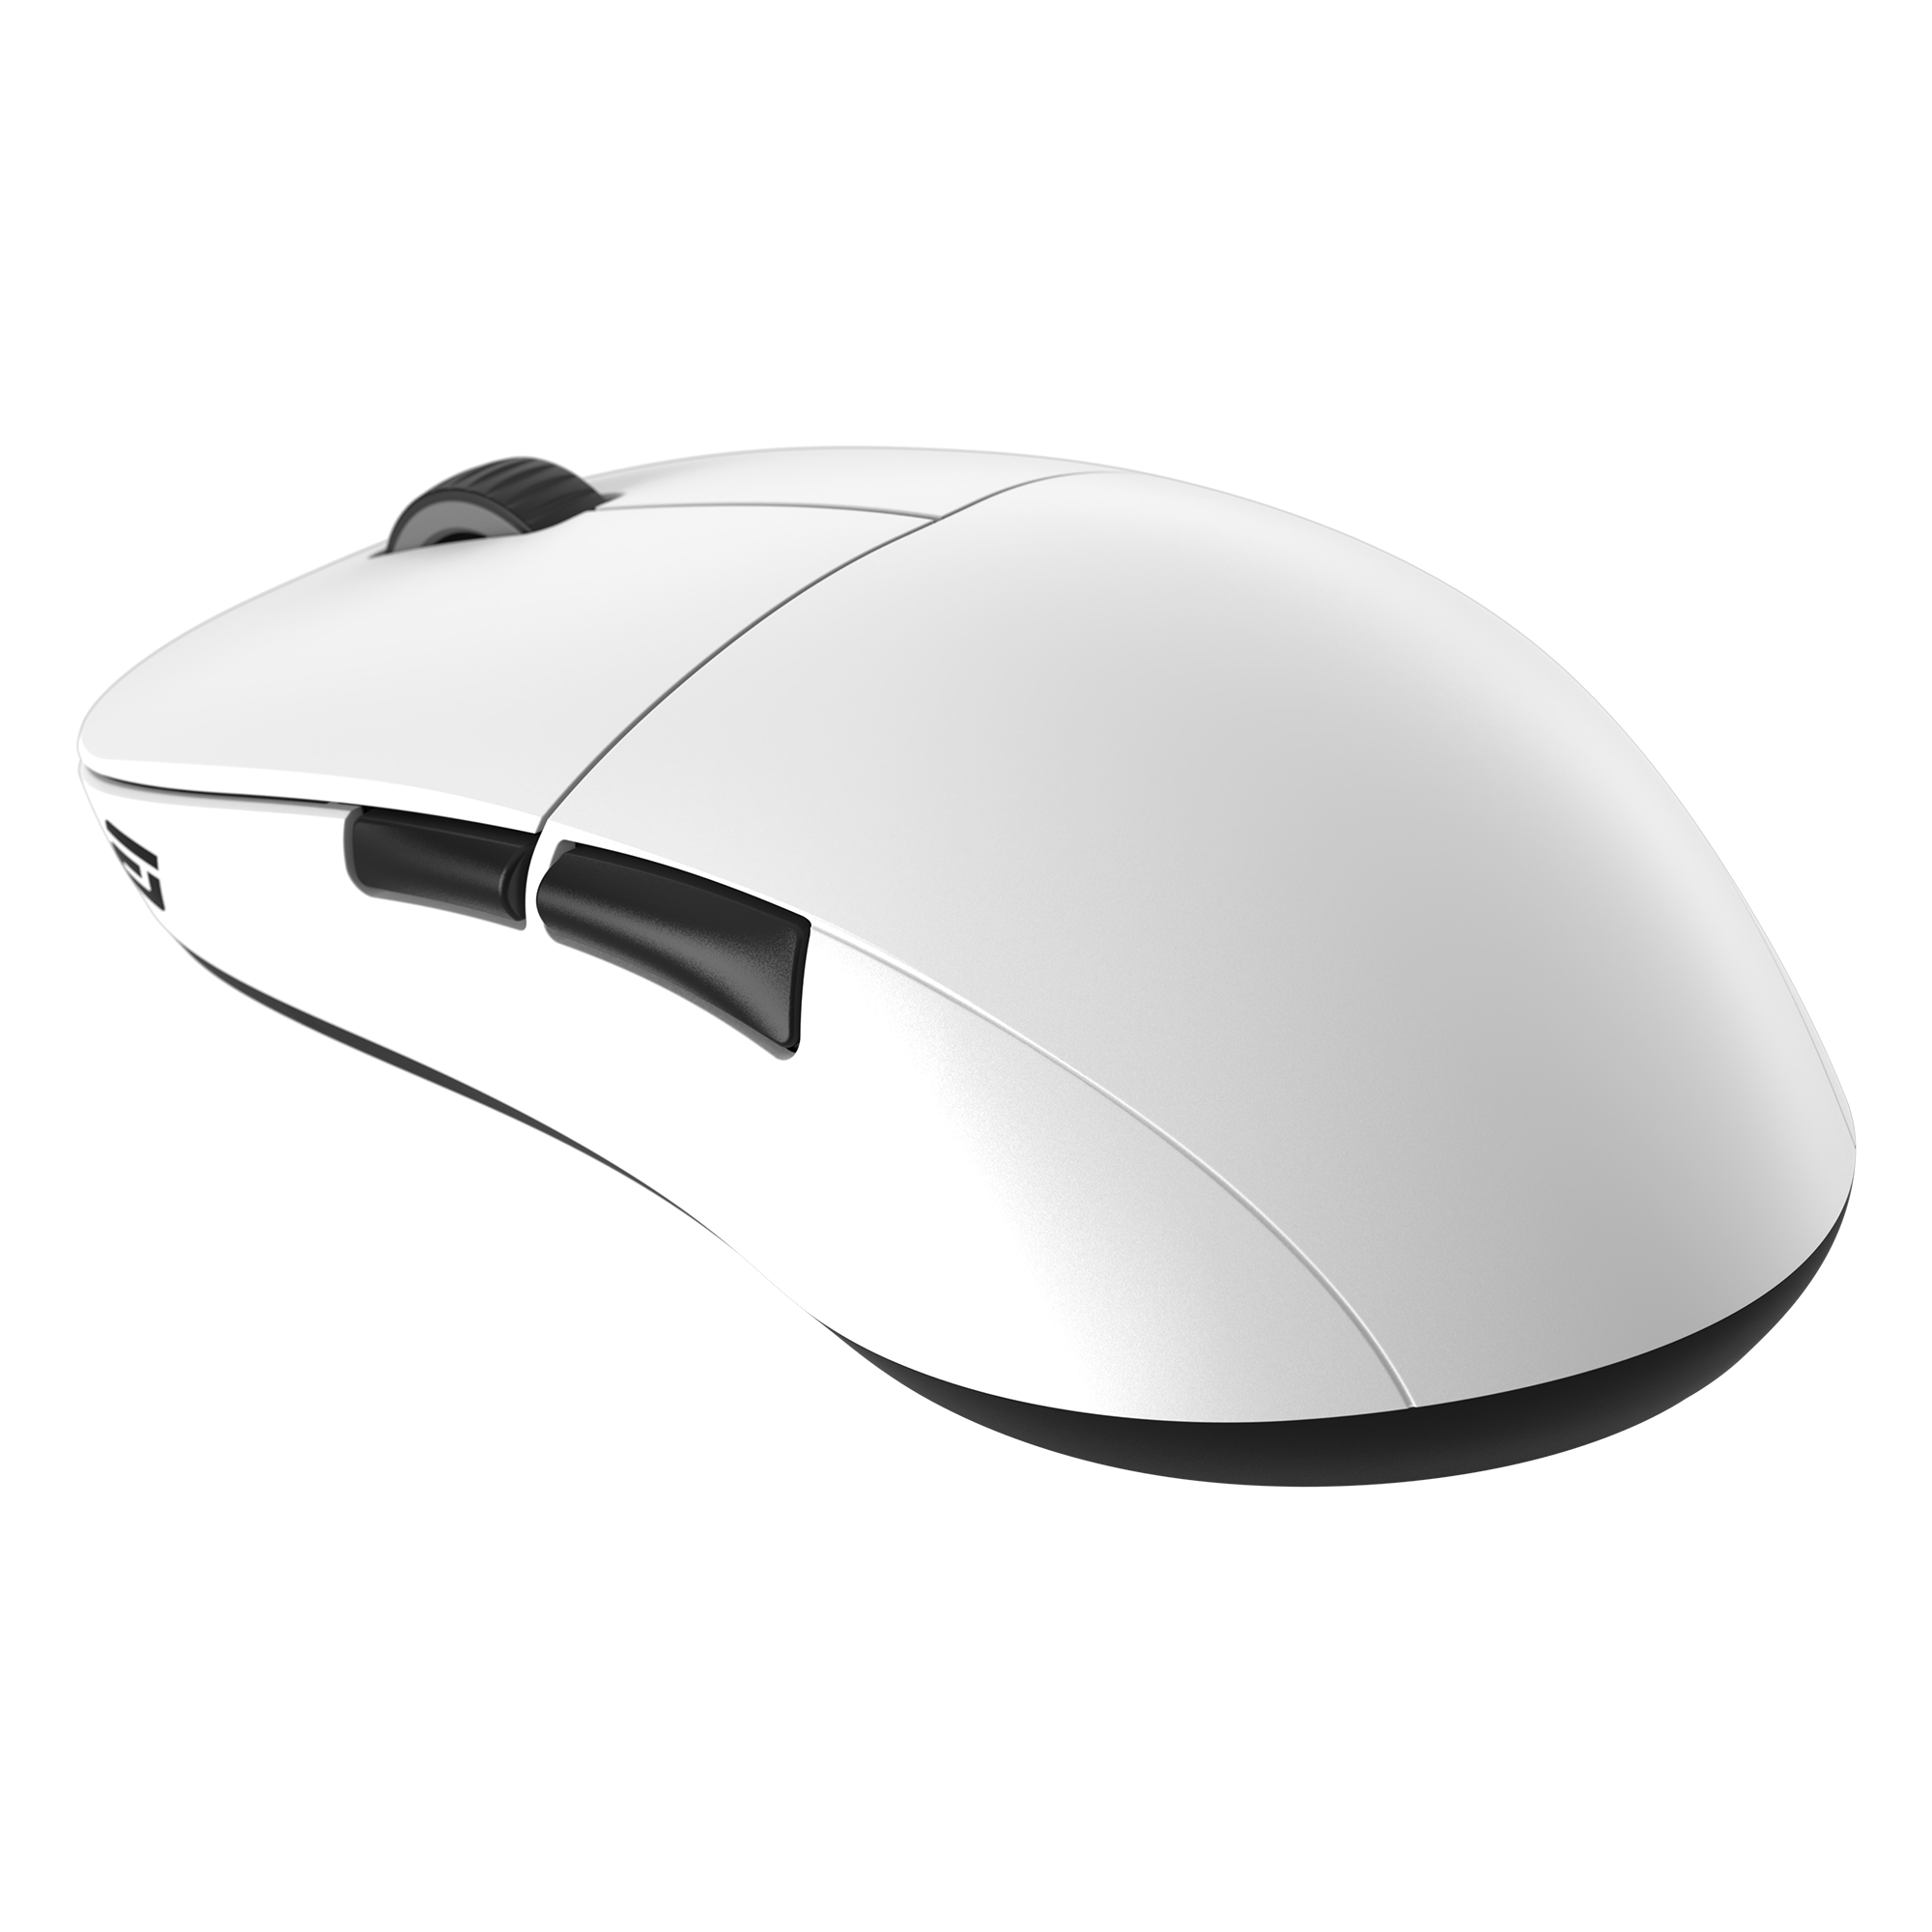 Endgame Gear - B Grade Endgame Gear XM2WE Wireless Optical Lightweight Gaming Mouse - White (EGG-XM2WE-WHT)